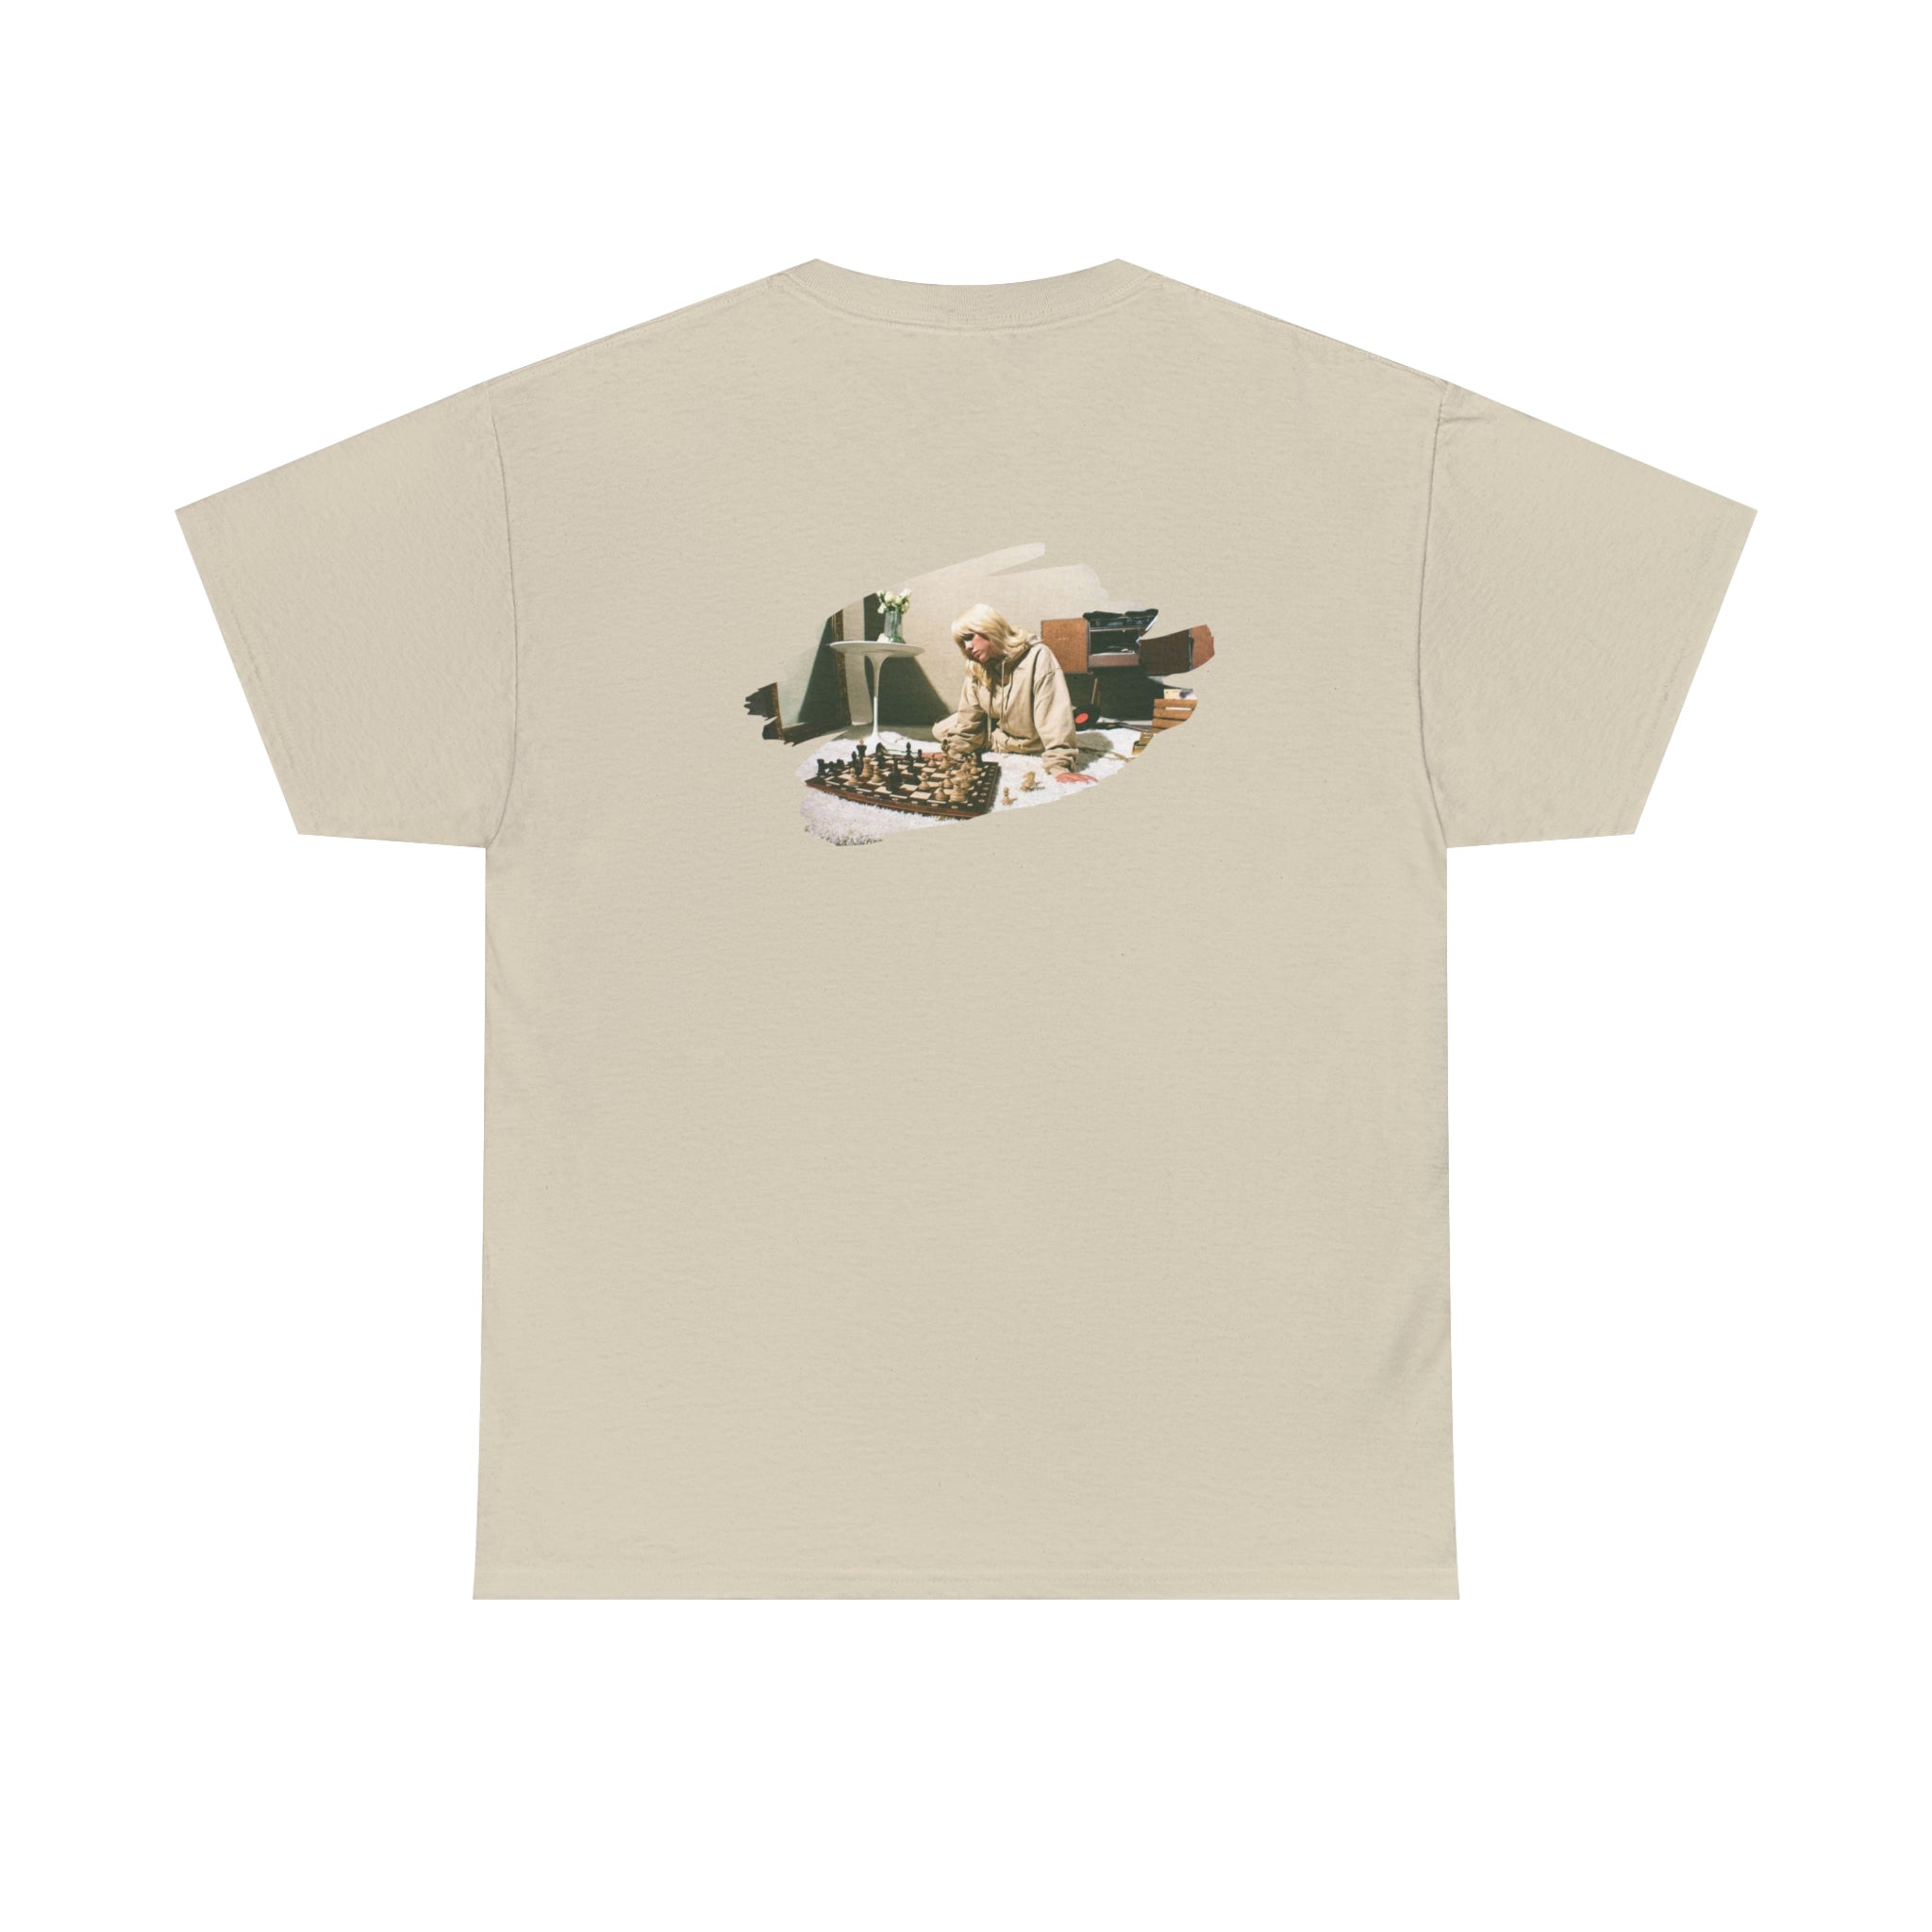 Billie Eilish Unisex T-Shirt | Fan Merch